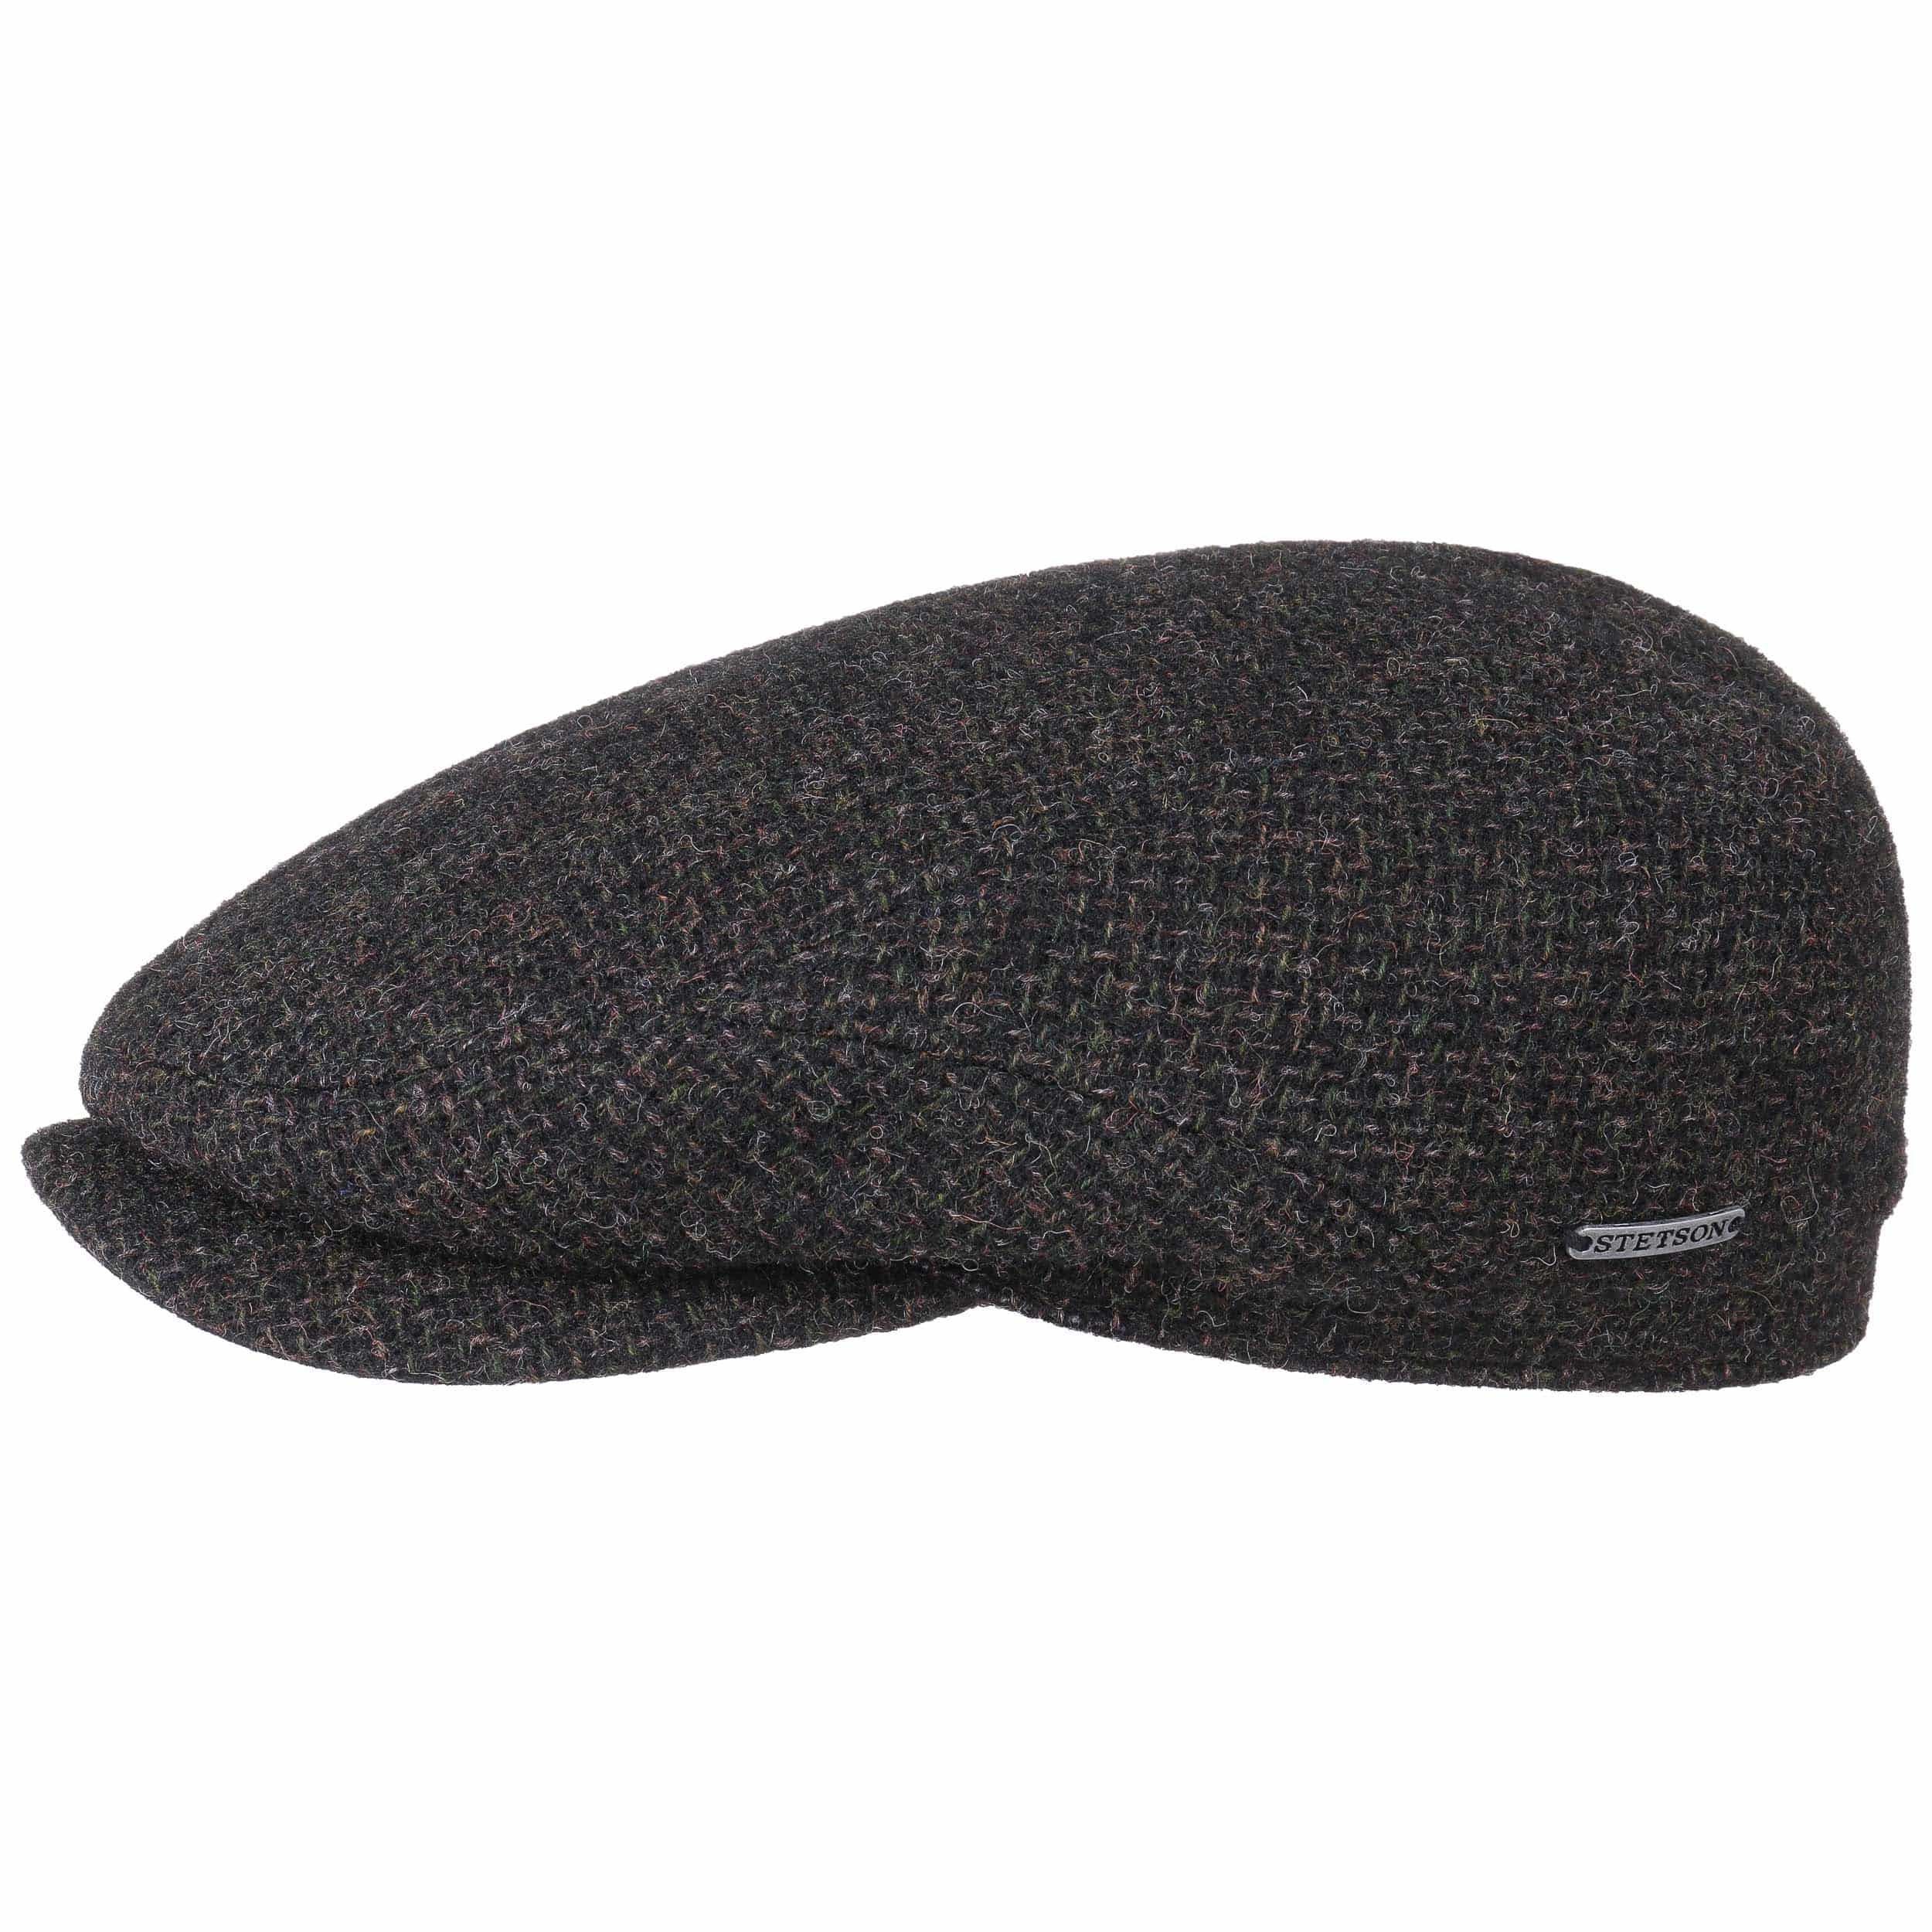 Flat caps for Men Stetson Belfast Tweed Flat Cap Men/’s Cap Fall//Winter Wool Cap Winter Cap with Cotton Lining Peaked Wool Cap